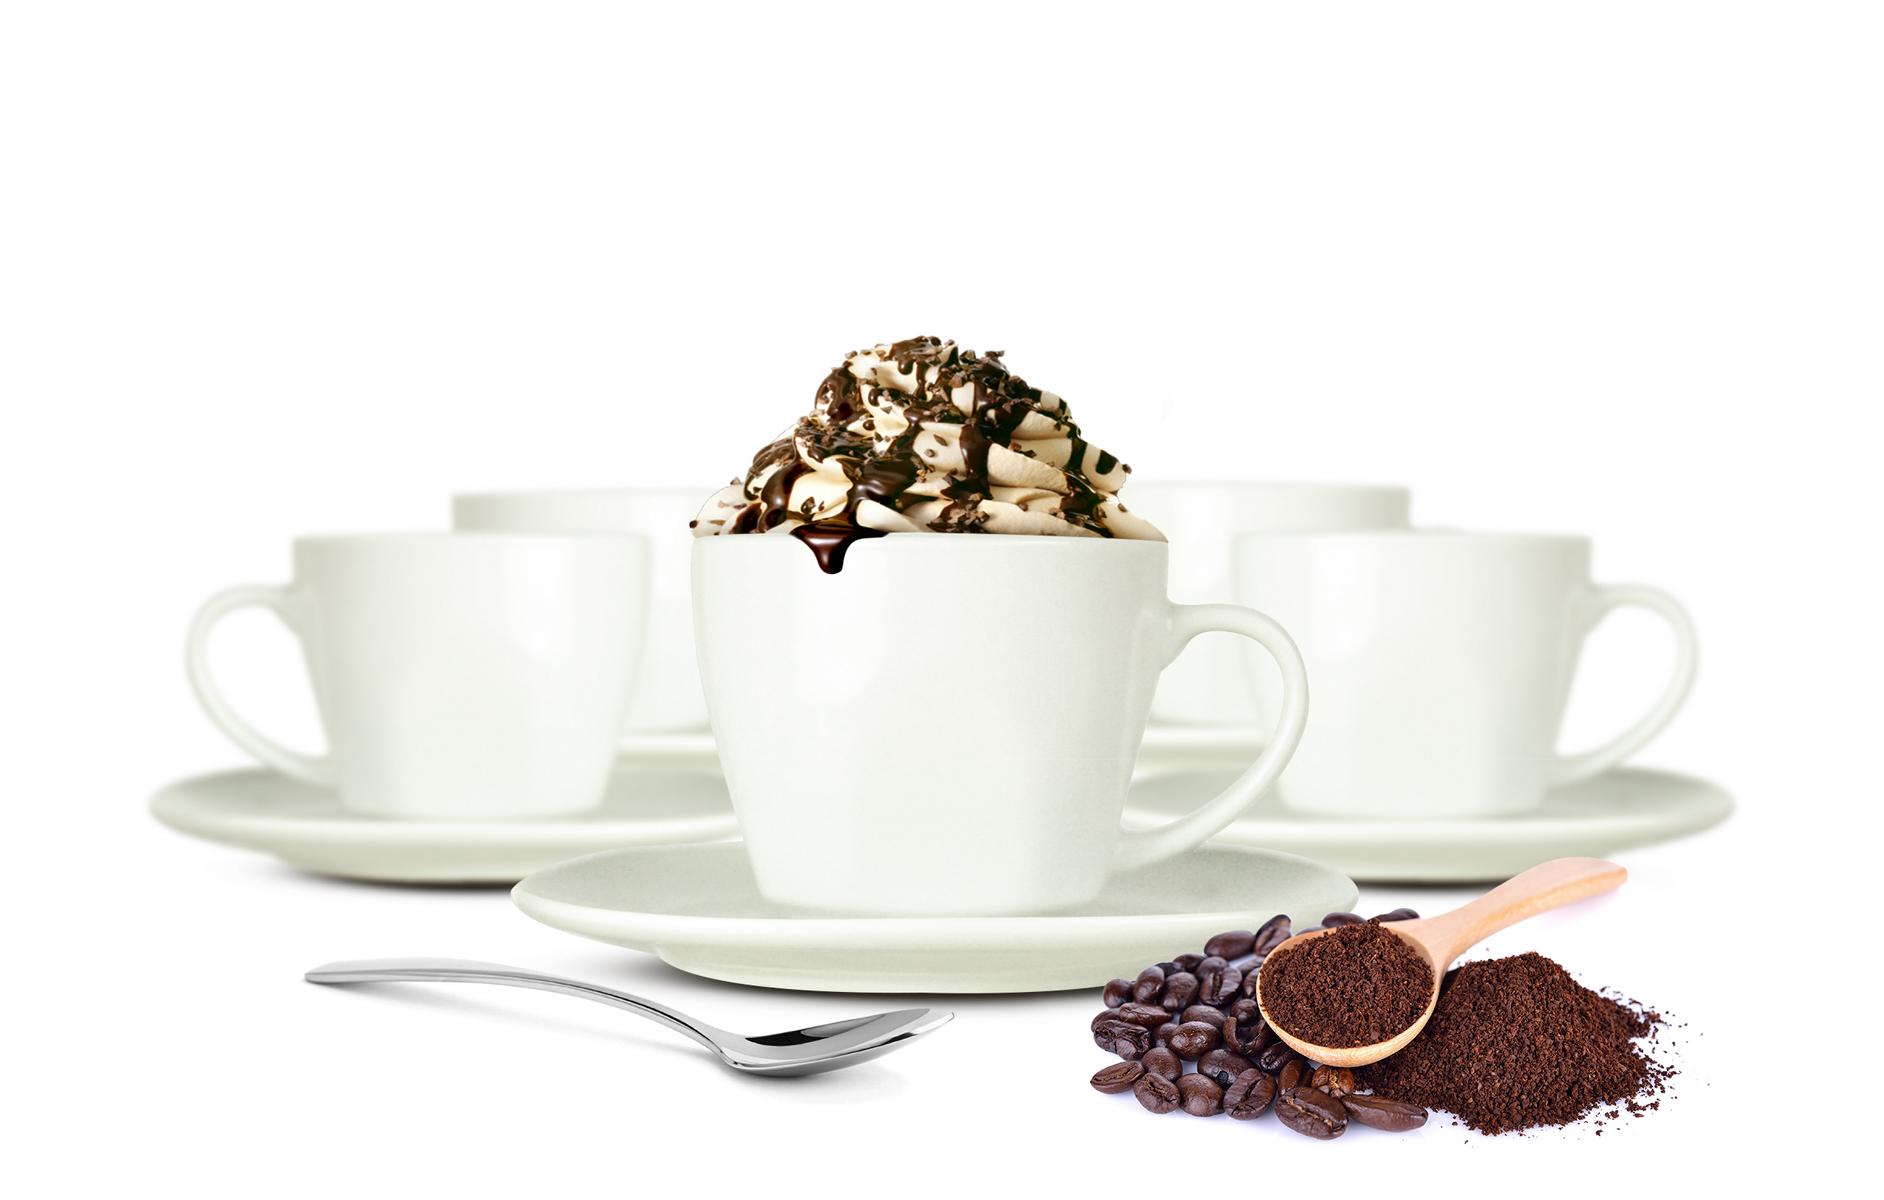 12tlg Cappuccino Tassen mit Untertassen Tassen Kaffeetasse Teetasse Porzellan